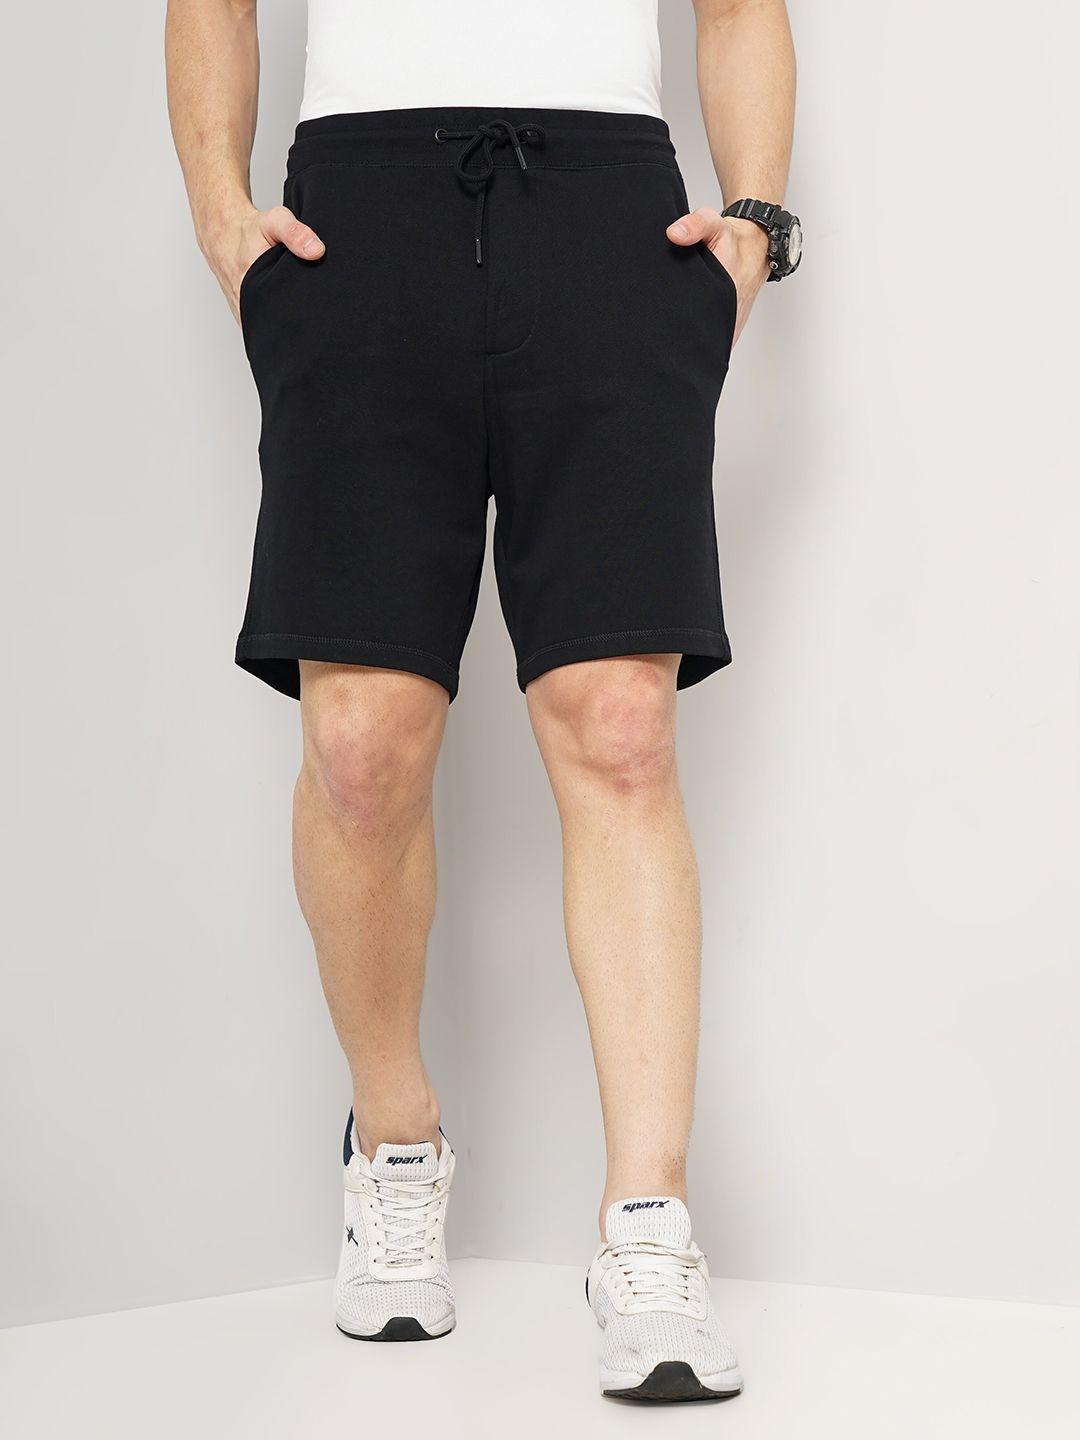 Celio Men Mid Rise Above knee Length Cotton Sports Shorts